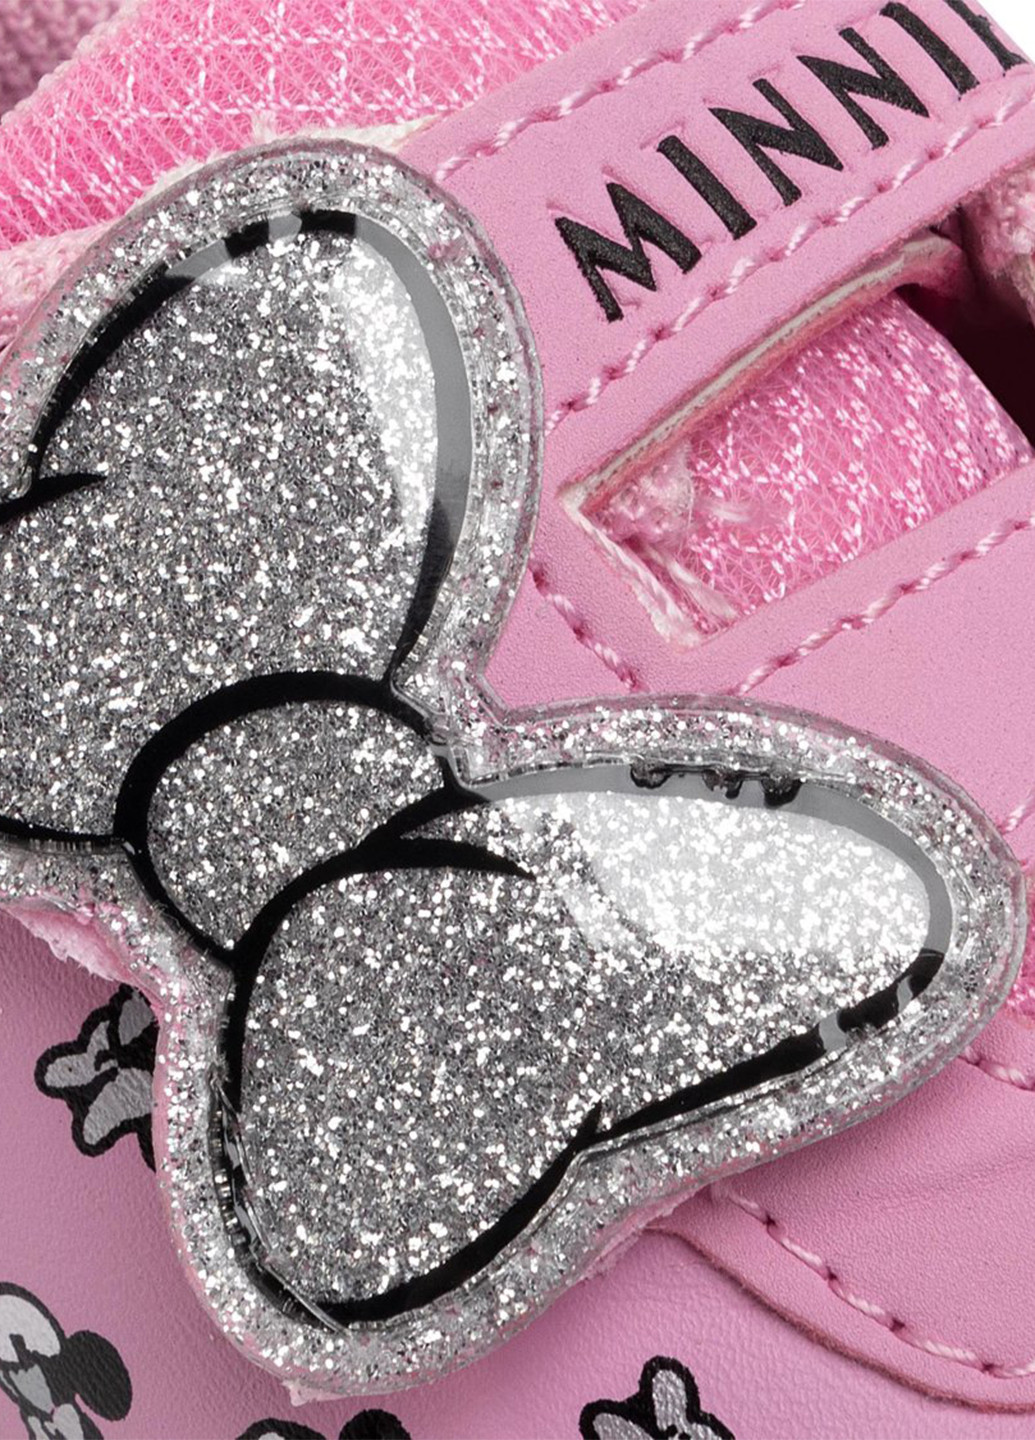 Розовые демисезонные кросівки Mickey&Friends CP23-5780-1DSTC